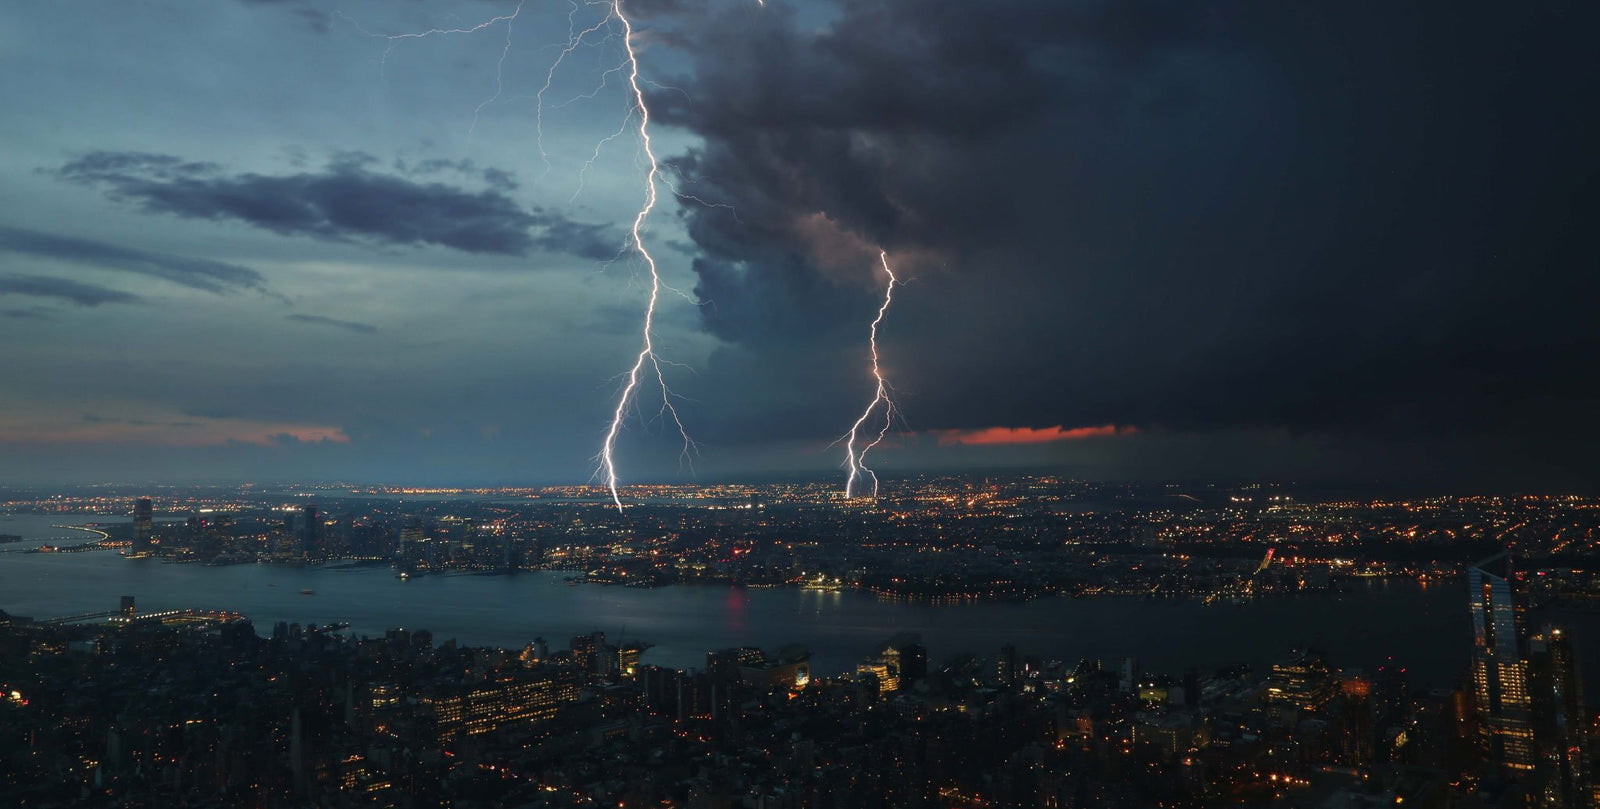 lightning strikes over city at night